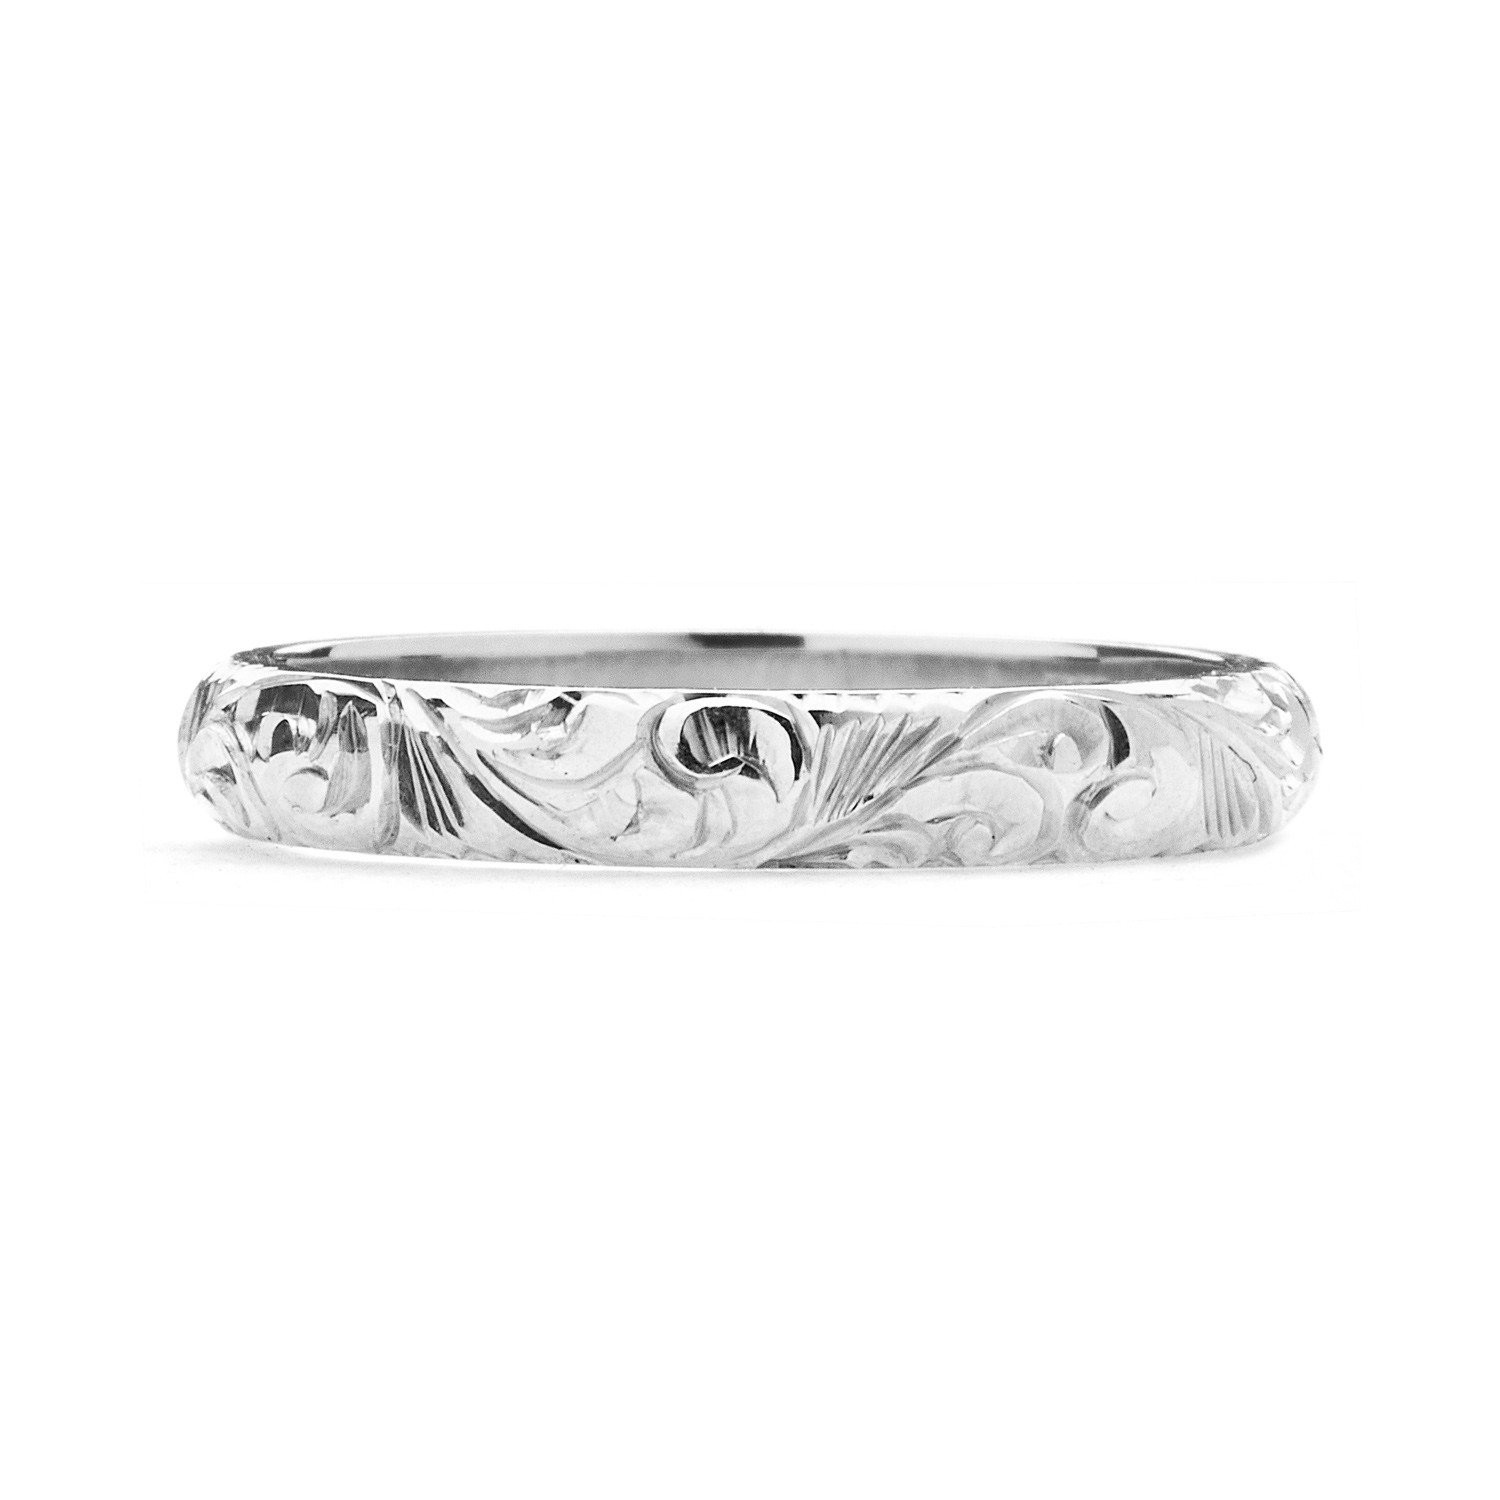 Ethical Wedding Rings
 Scrolls Engraved Ethical Gold Wedding Ring 3mm – LEBRUSAN